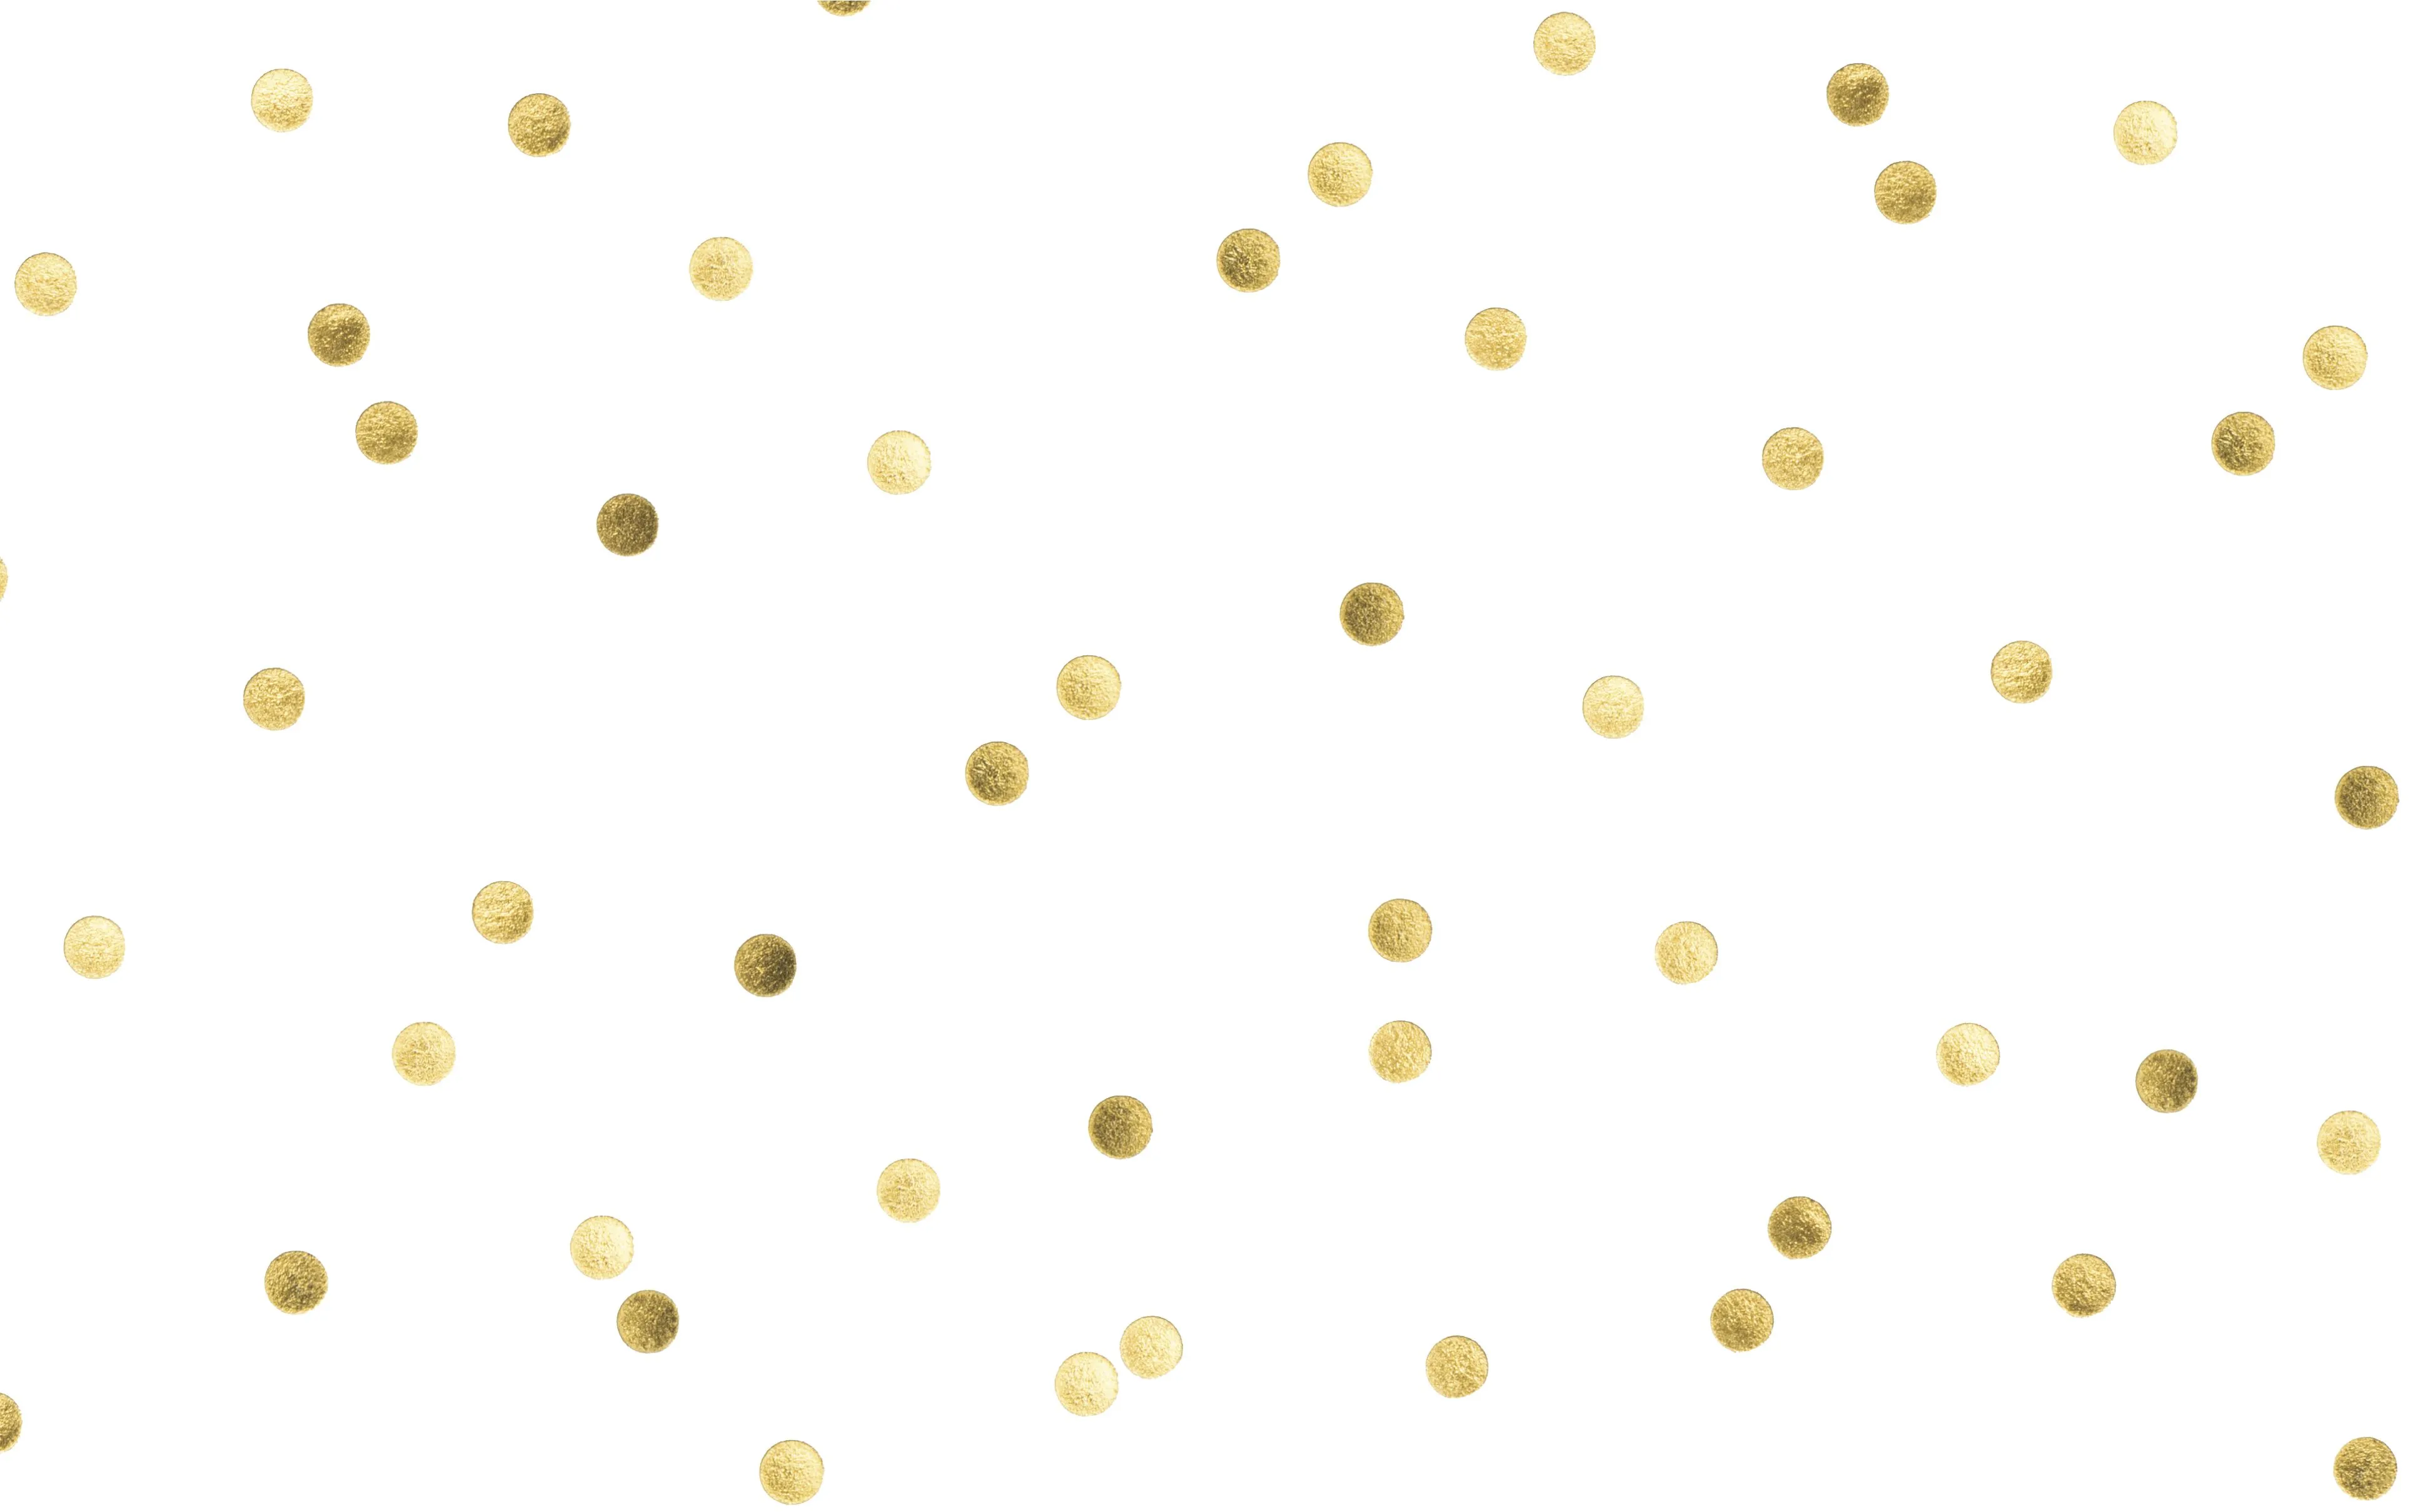 gold confetti ipad/desktop wallpaper via designlovefest | Art ...